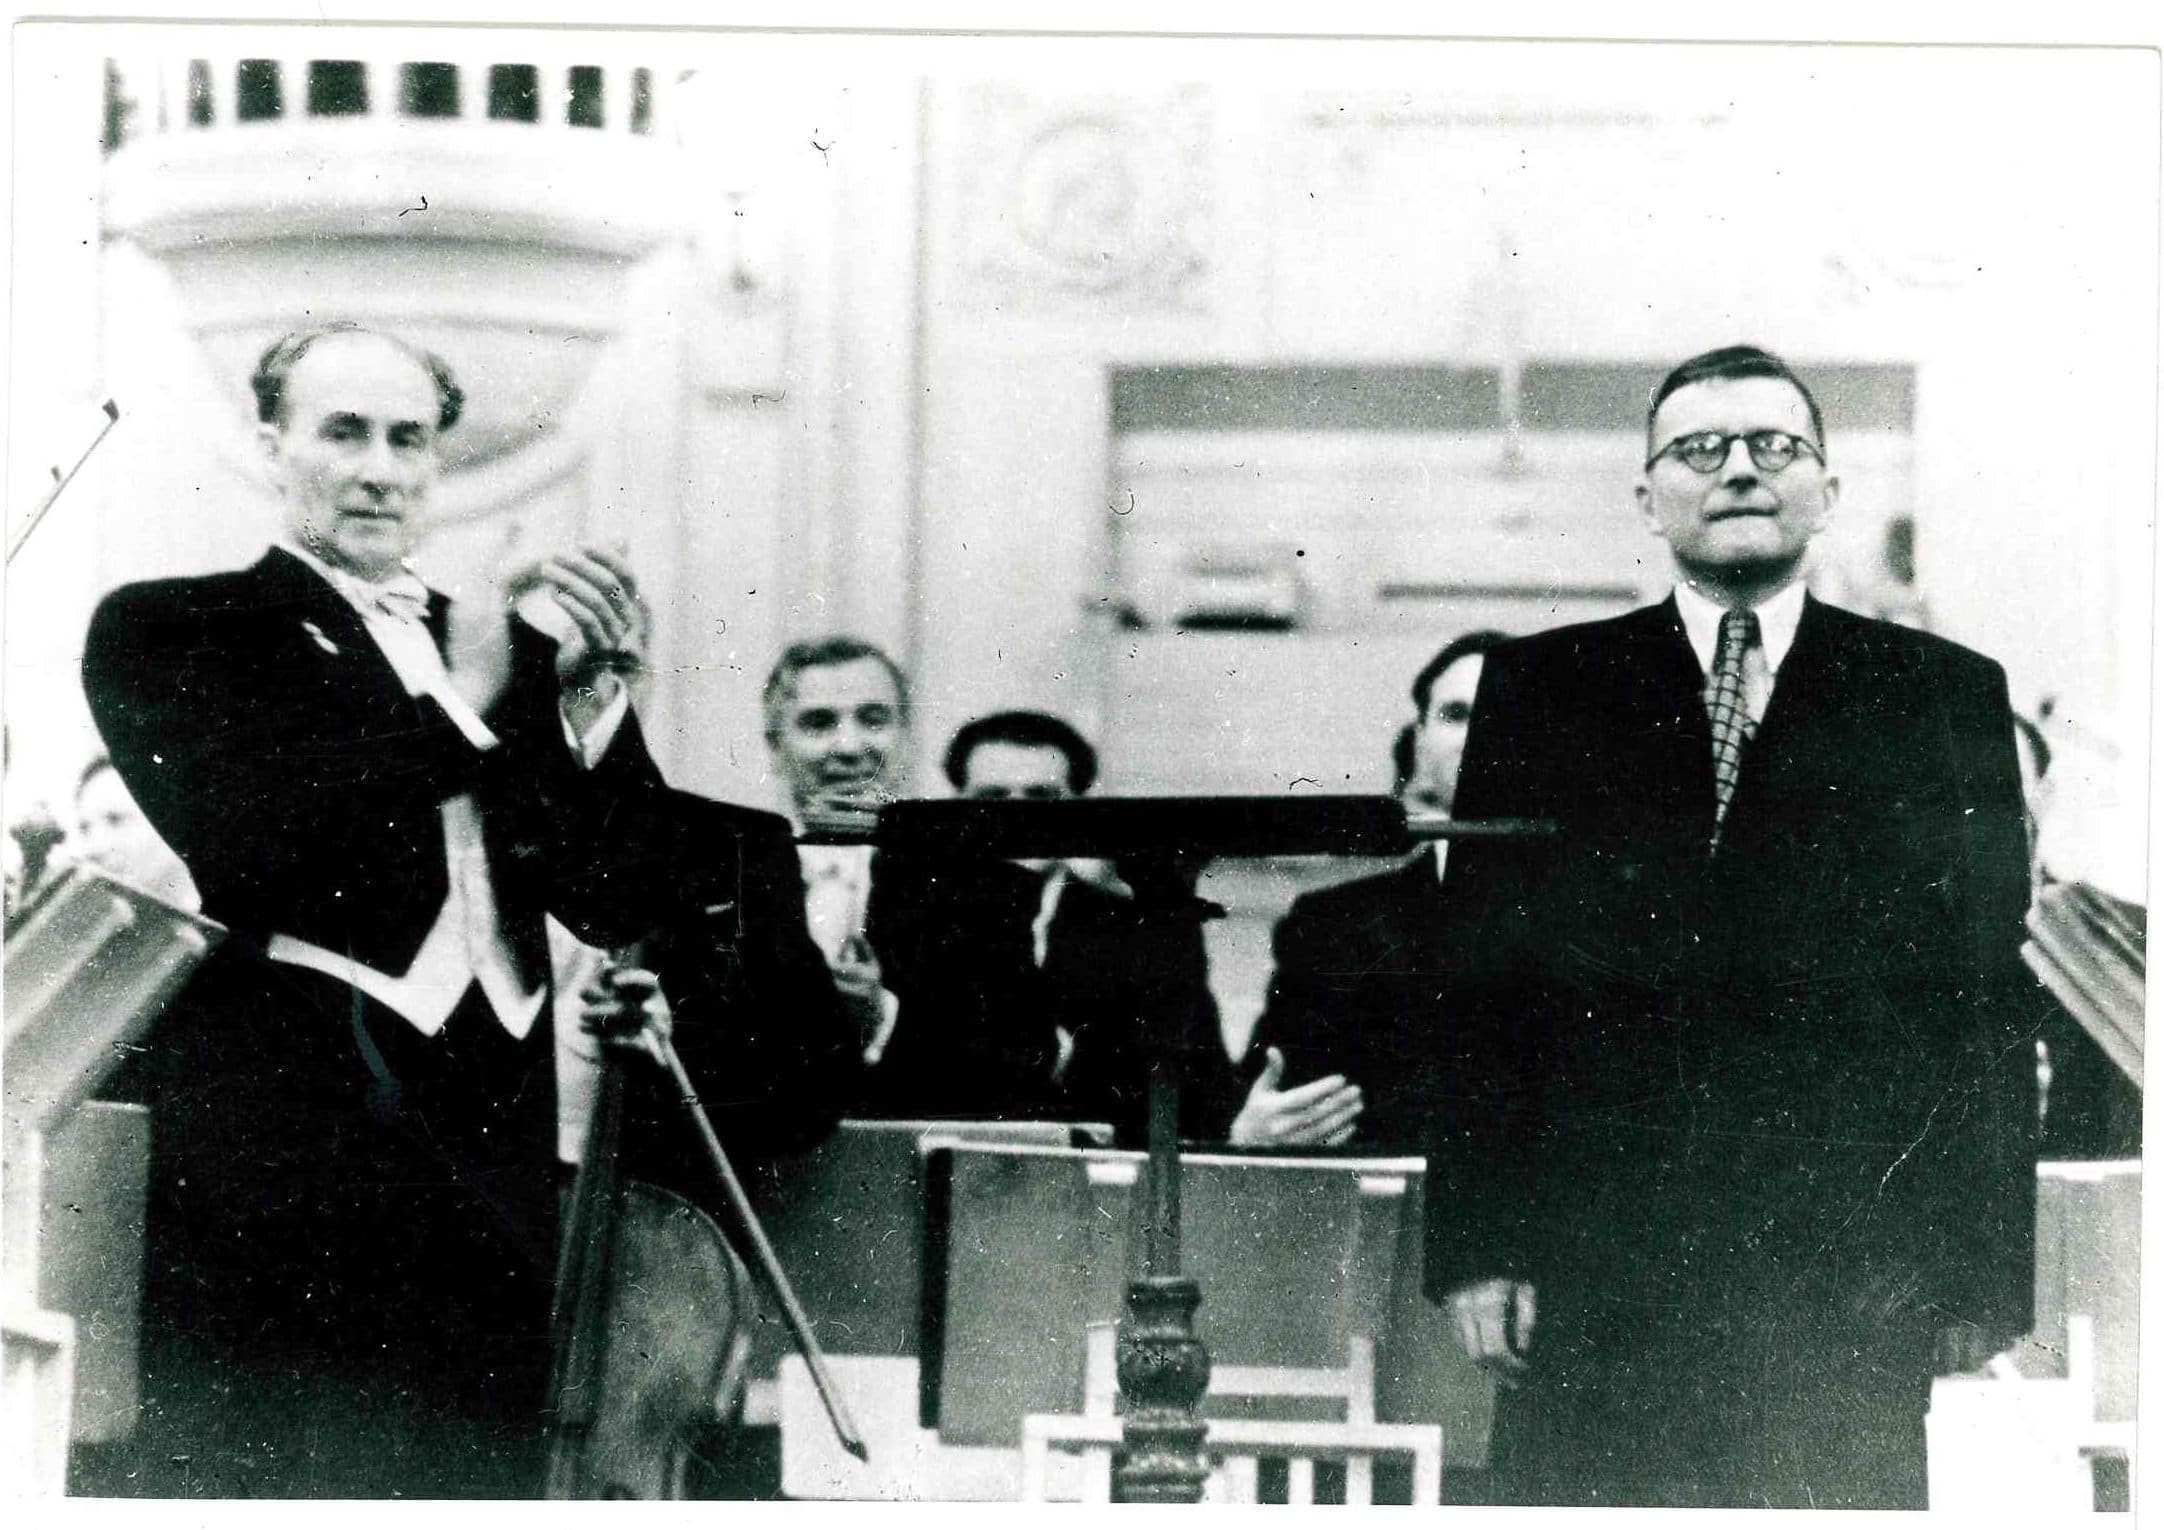 بعد از نمایش سمفونی دهم شوستاکوویچ.  اوگنی مروینسکی، دیمیتری شوستاکوویچ.  17 دسامبر 1953.  آرشیو فیلارمونیک سن پترزبورگ.  D. D. Shostakovich